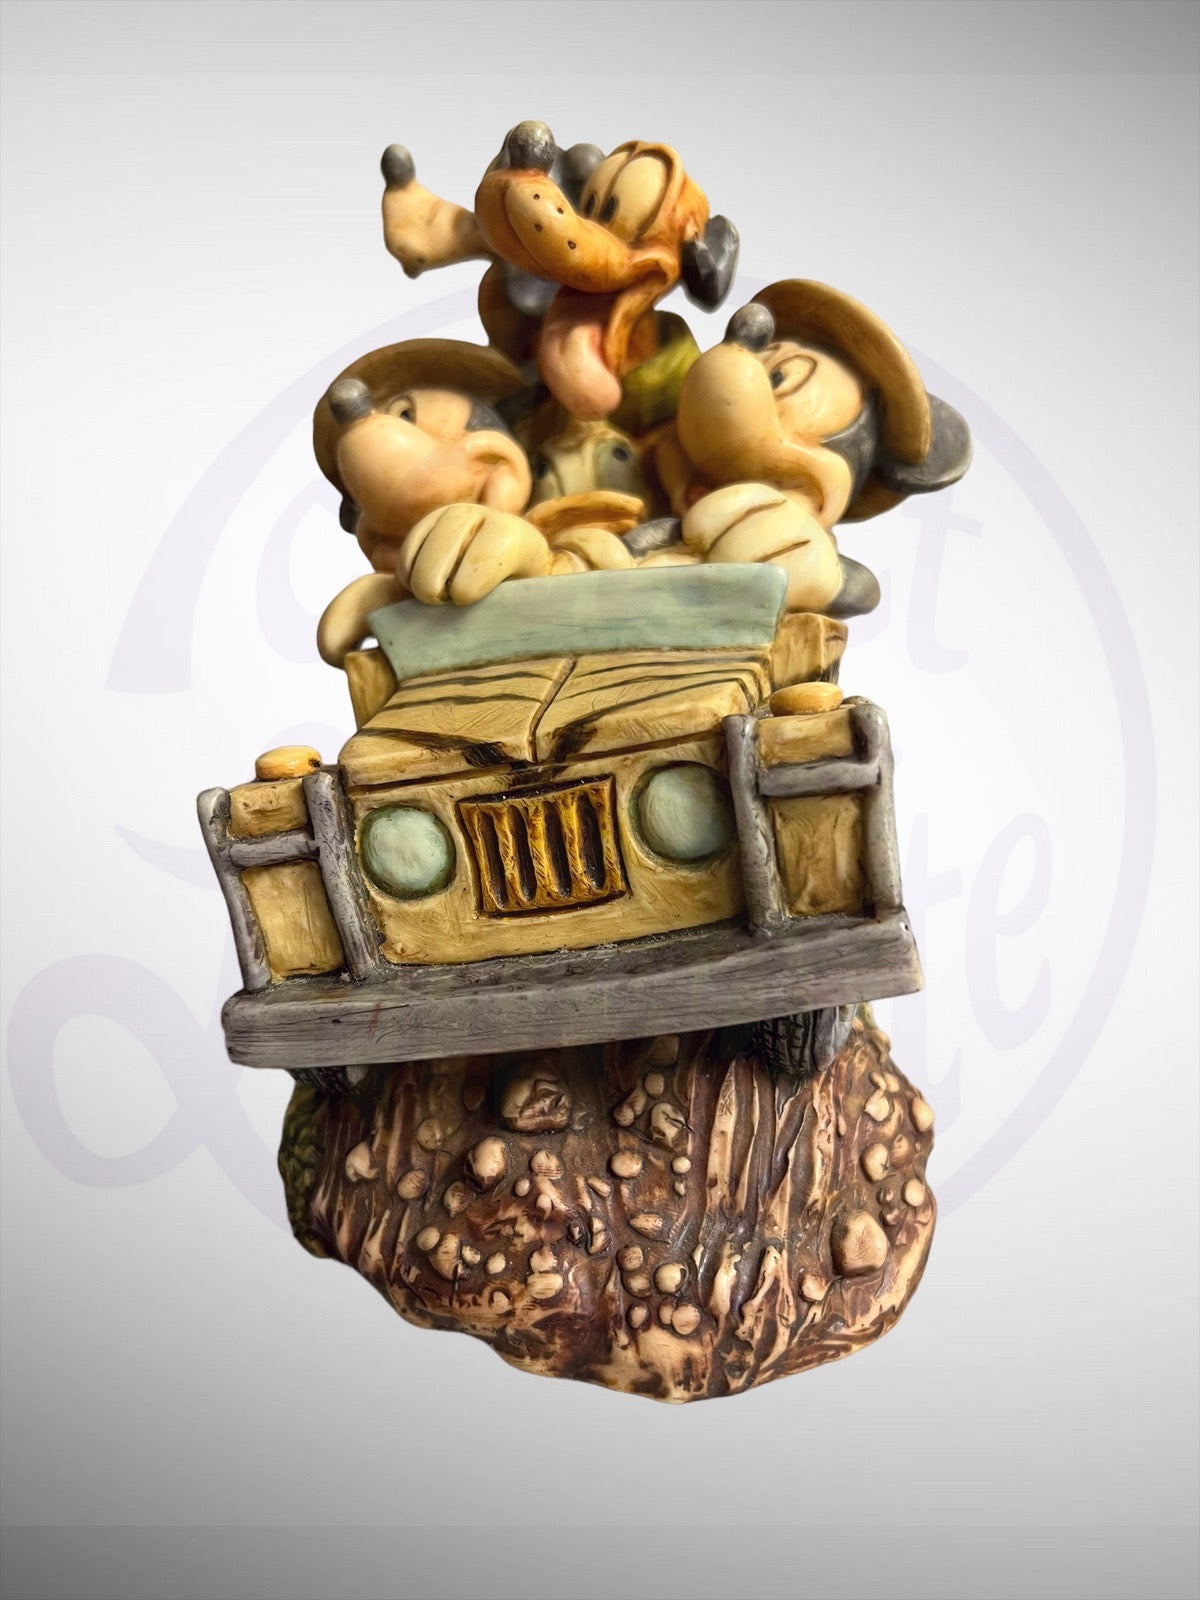 Harmony Kingdom Box - Disney Mickey's Safari Mickey Minnie Donald Goofy Pluto Figurine No Box